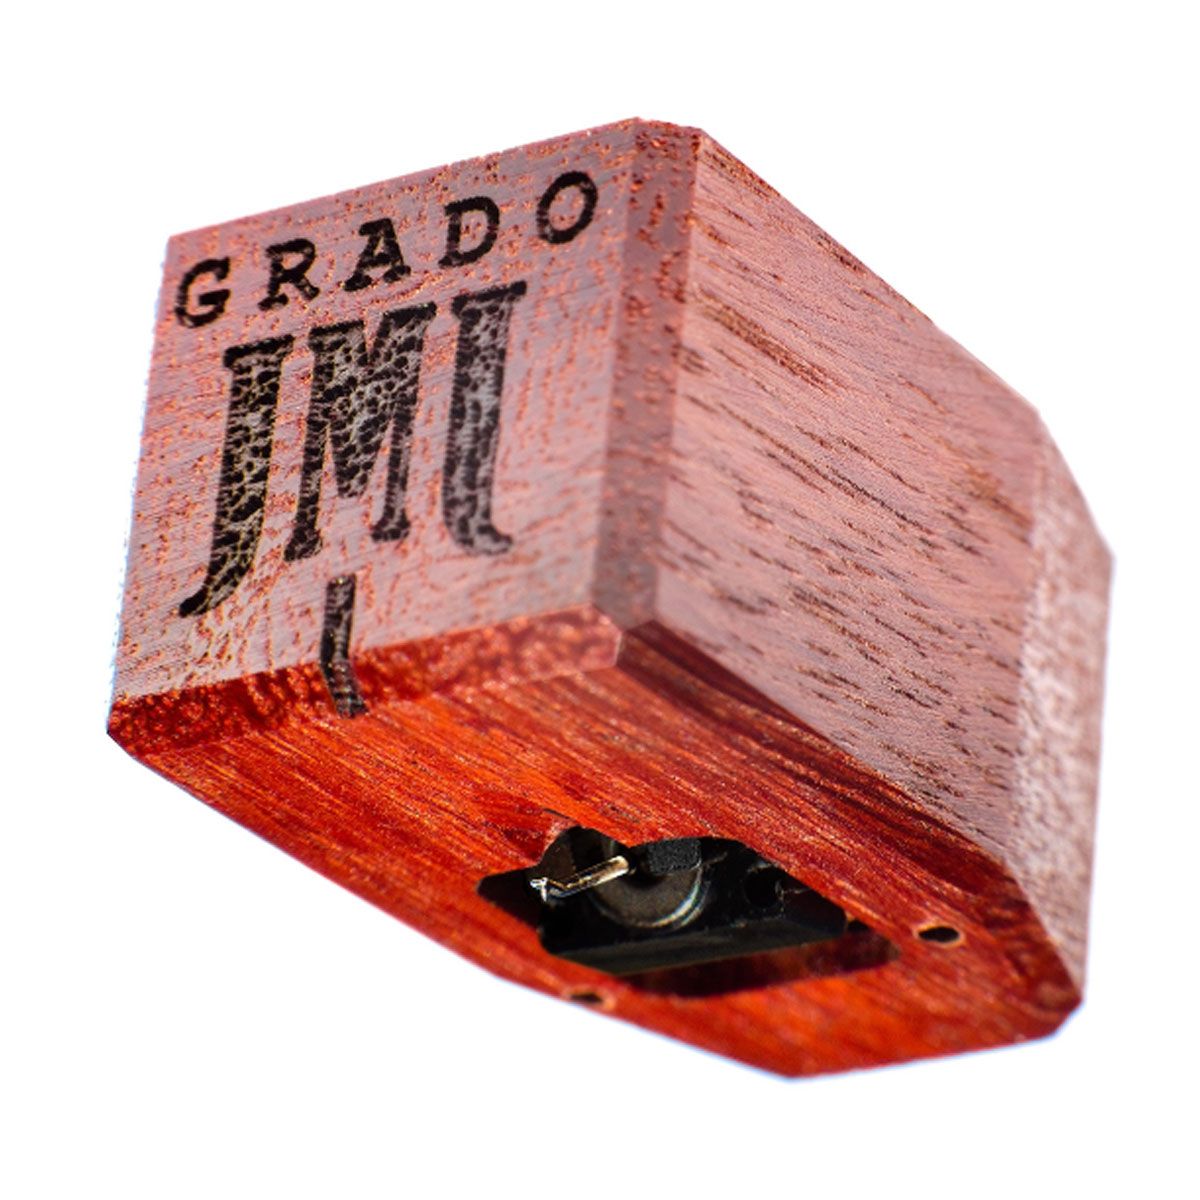 Grado Platinum3 Phono Cartridge - Low Output, front view
